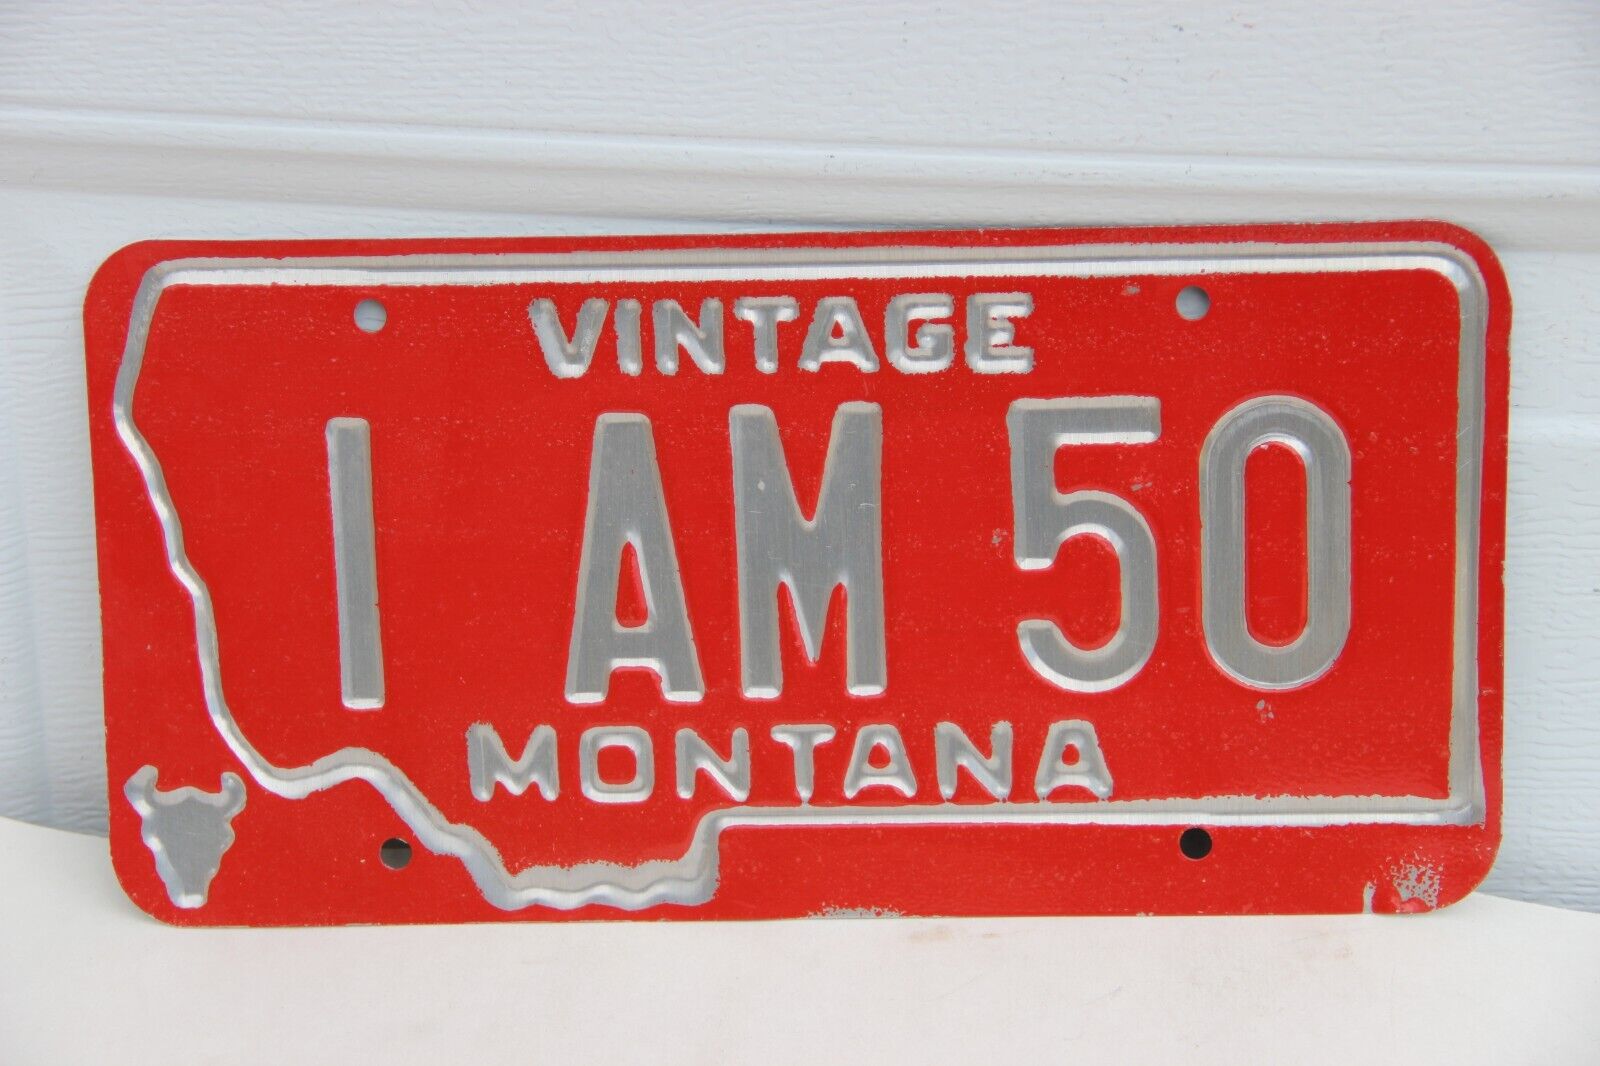 Vintage Montana License Plate  Vanity   I AM 50 old cars